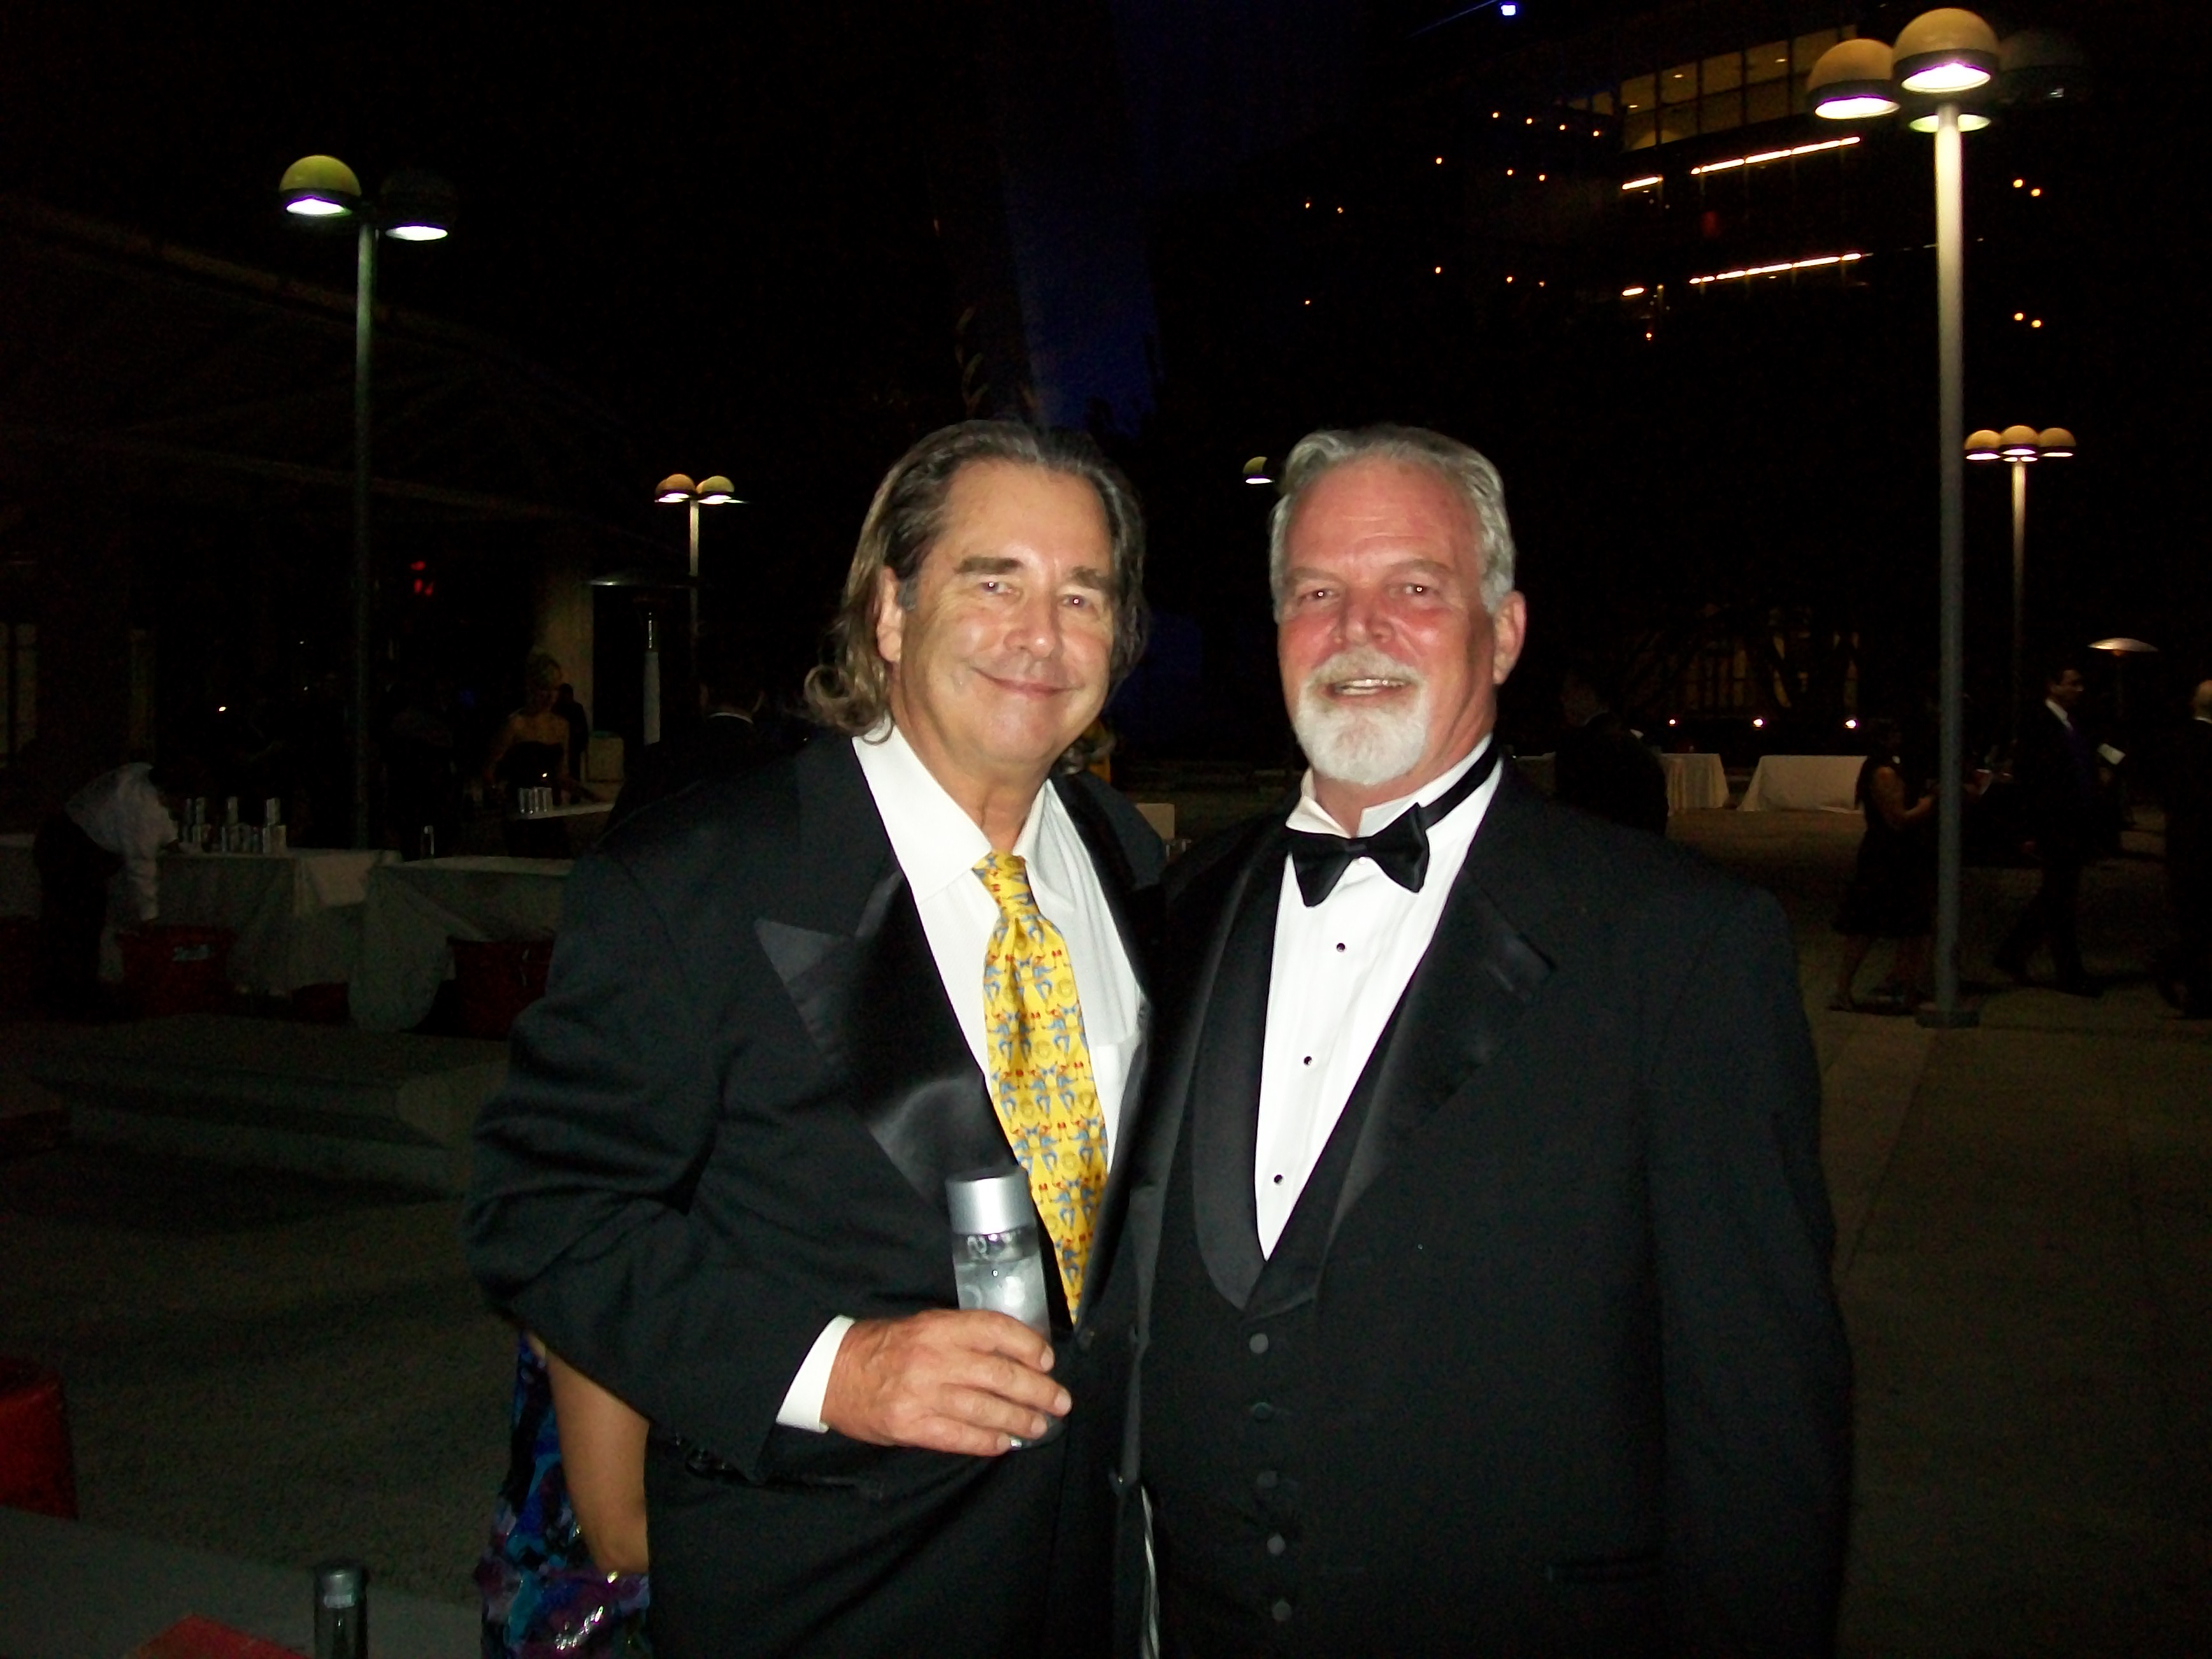 2009 Emmy Awards (L) Beau Bridges, (R) Richard Partlow